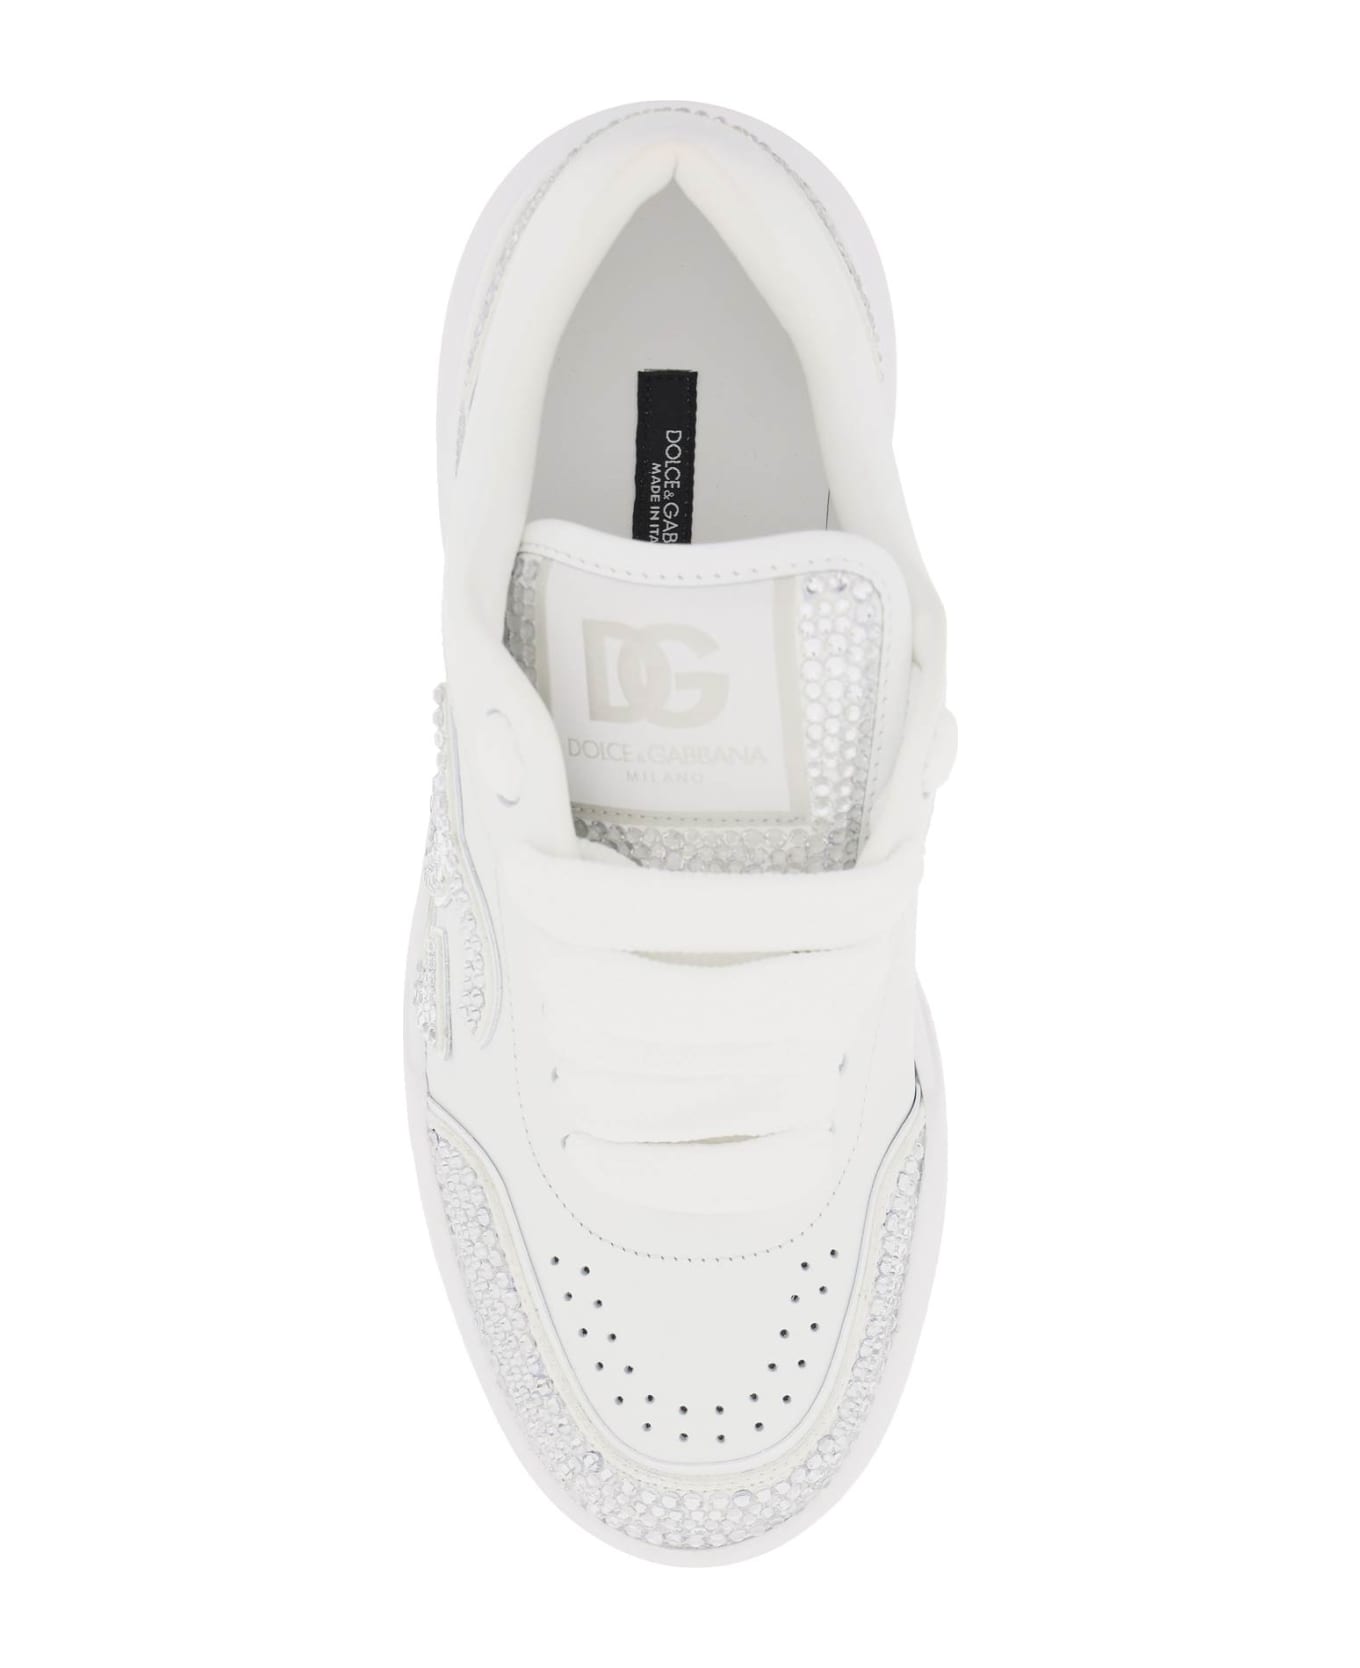 Dolce & Gabbana New Roma Embellished Sneakers - Bianco/bianco